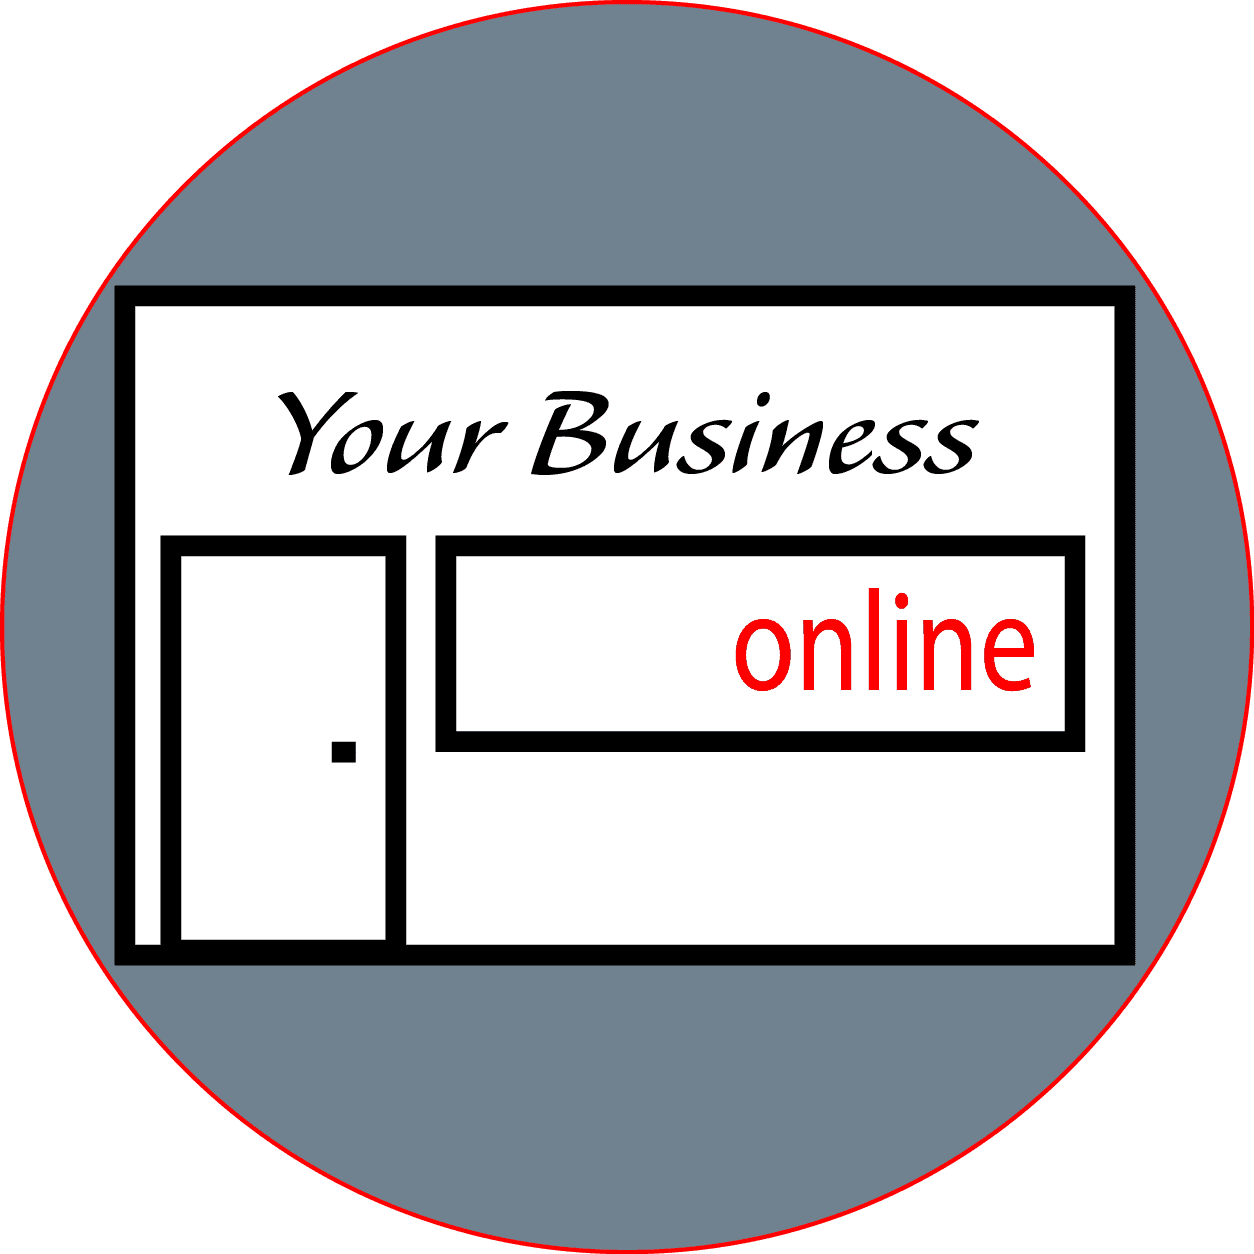 Every business needs a website